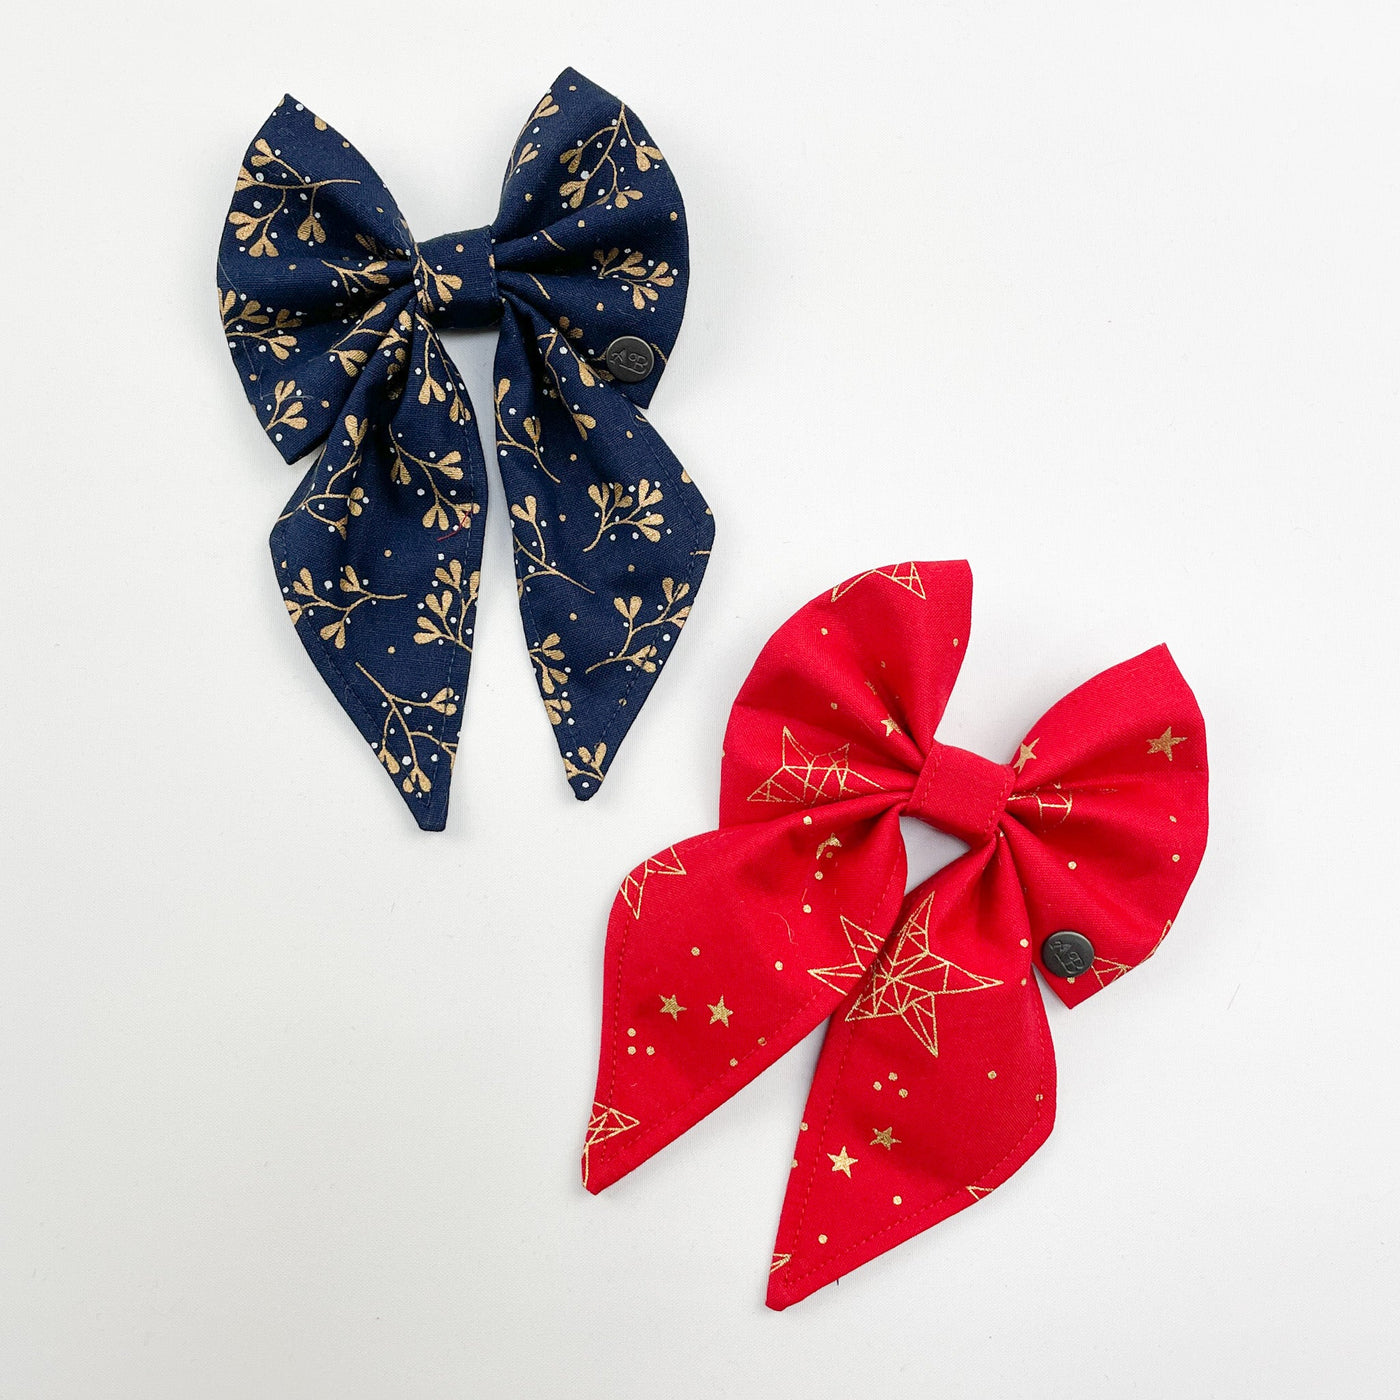 Navy Mistletoe sailor bow tie and Red Christmas star sailor bow tie